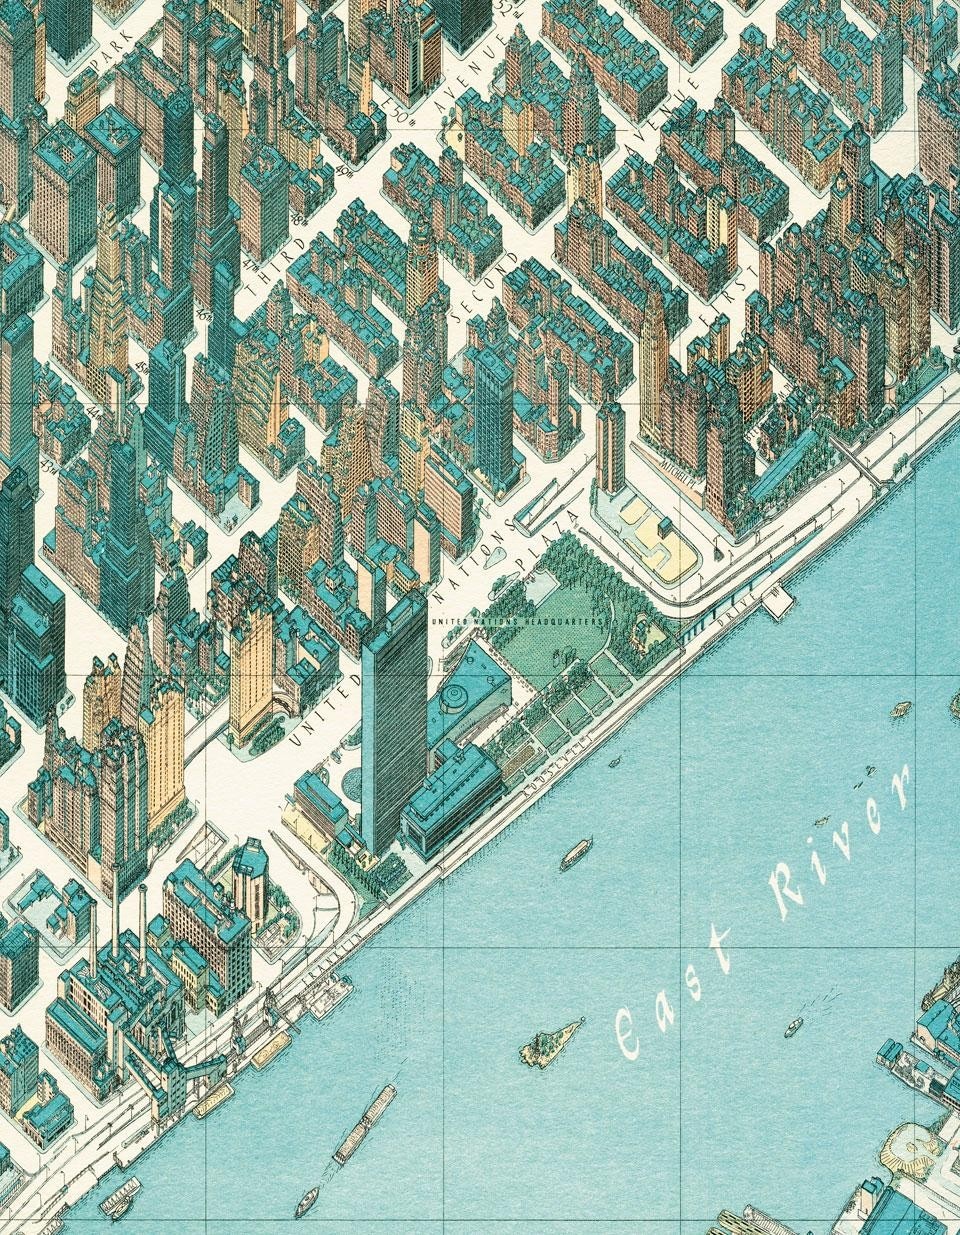 Hermann
Bollmann, <em>Map of NYC</em>
(1963)